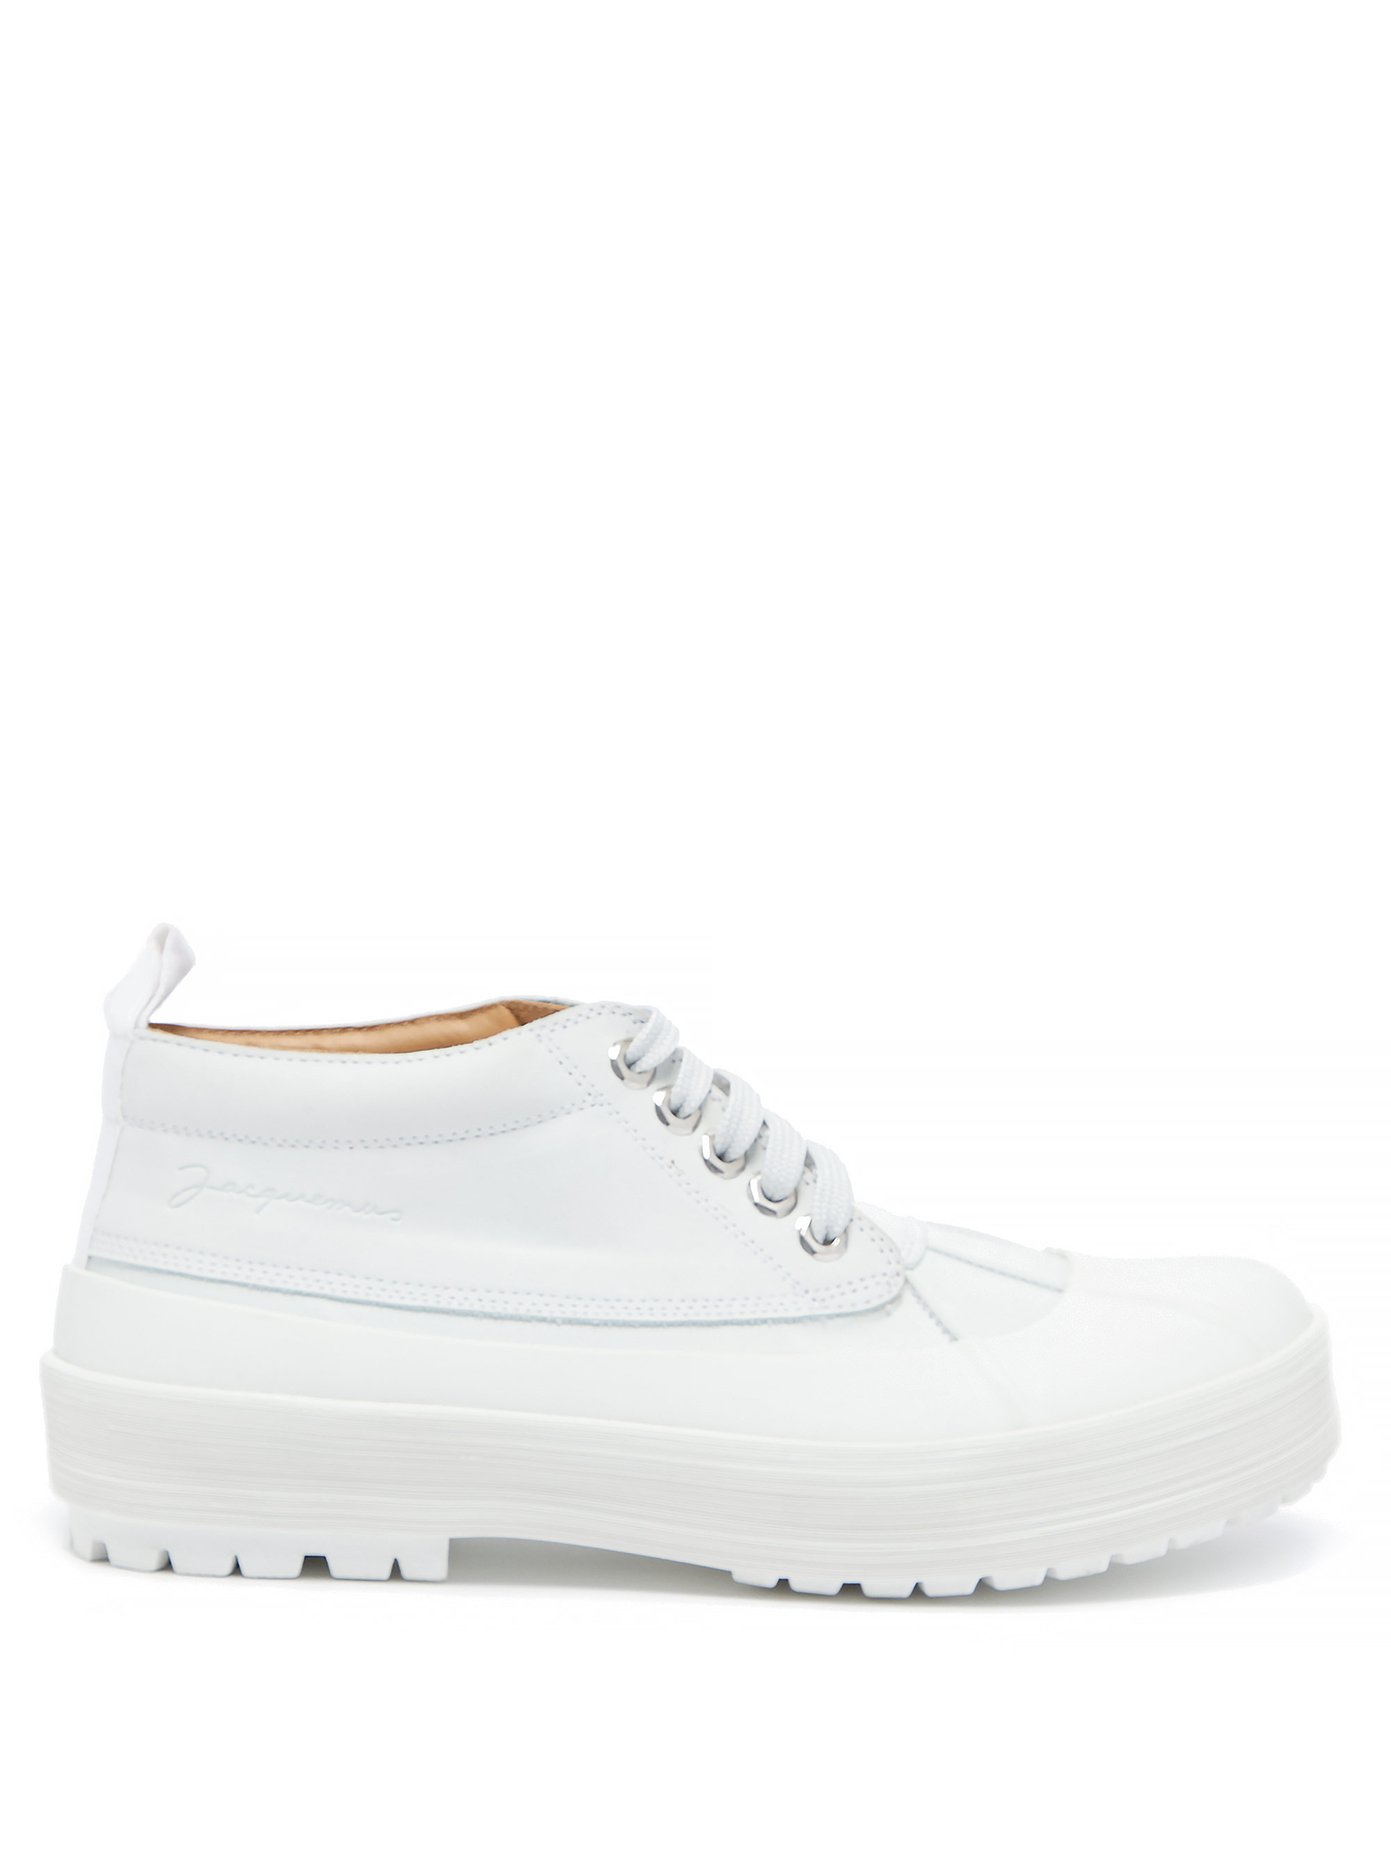 jacquemus shoes white